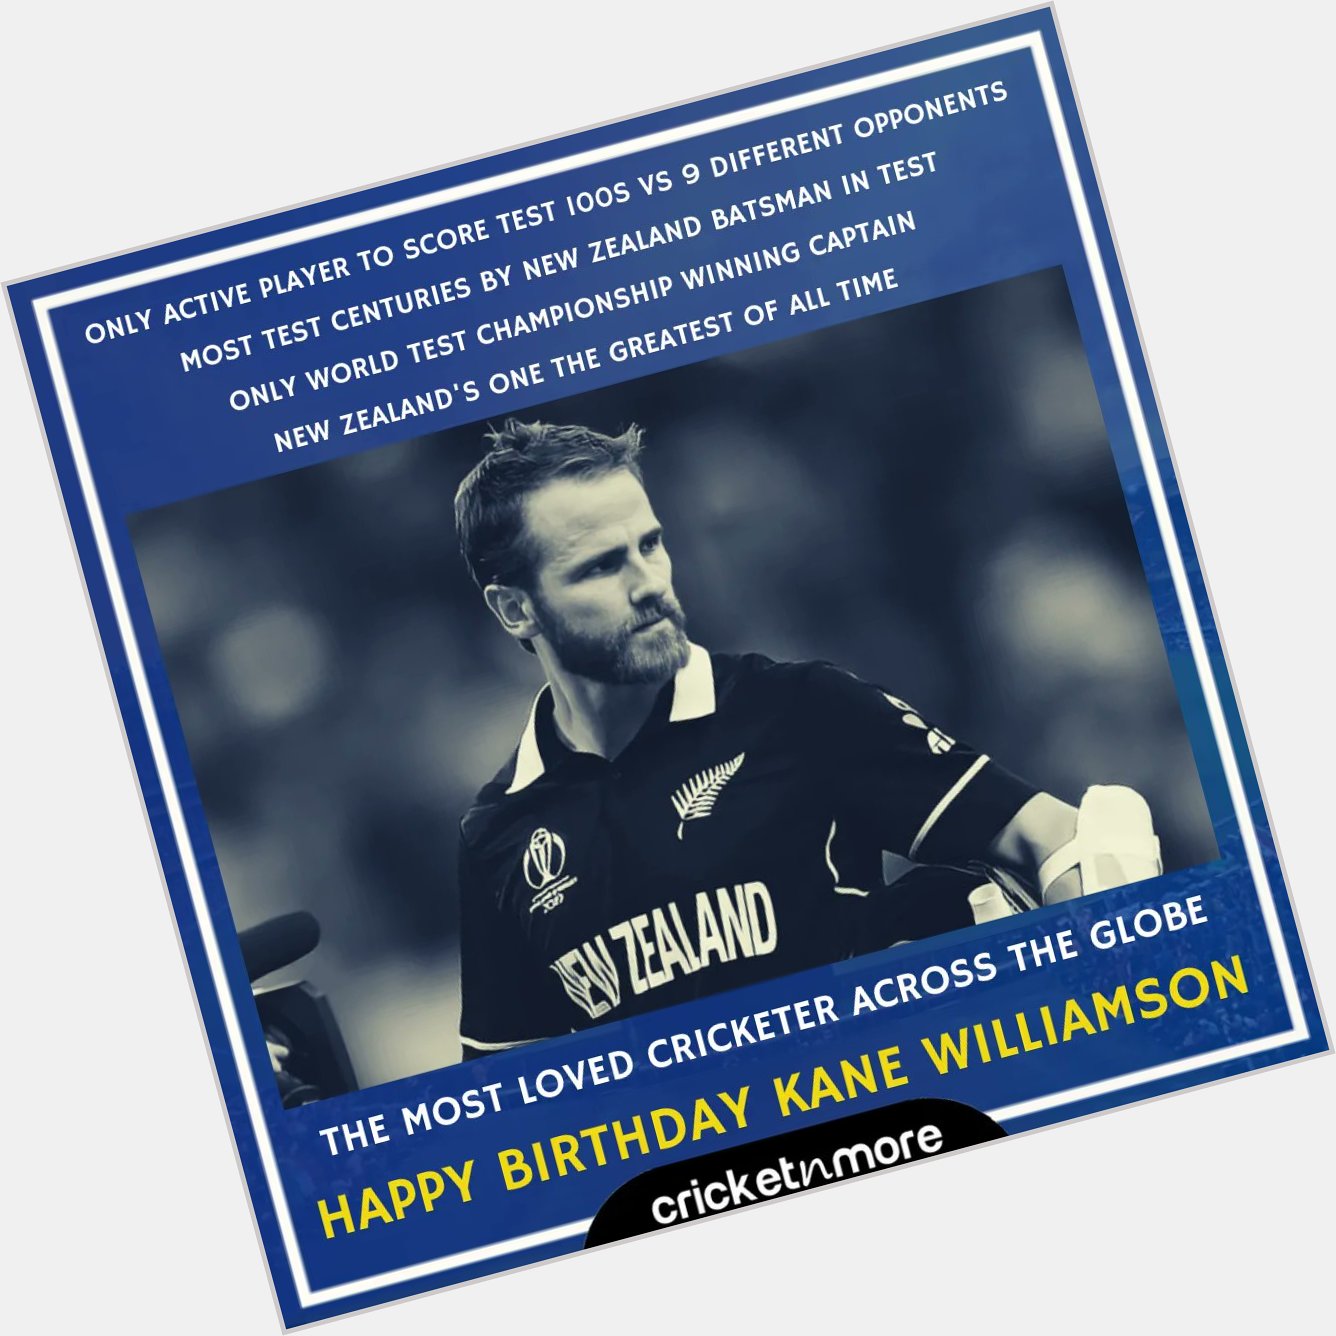 Happy Birthday Kane Williamson  .
.      